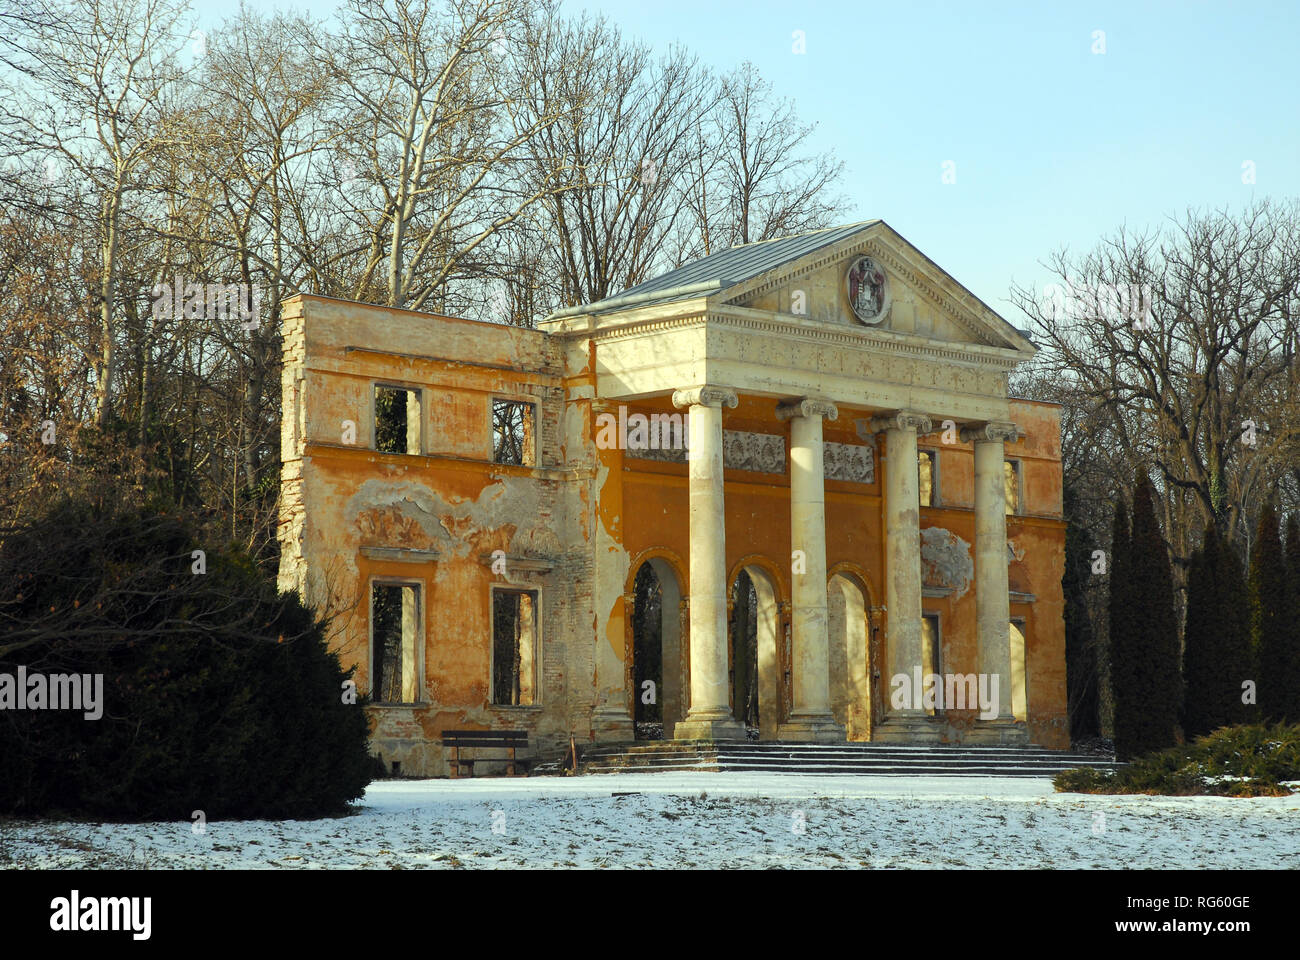 Ruinen des zerstörten Habsburg Palast im Arboretum in Alcsútdoboz, Ungarn. Az elpusztult Habsburg - palota romjai Alcsútdobozon. Stockfoto